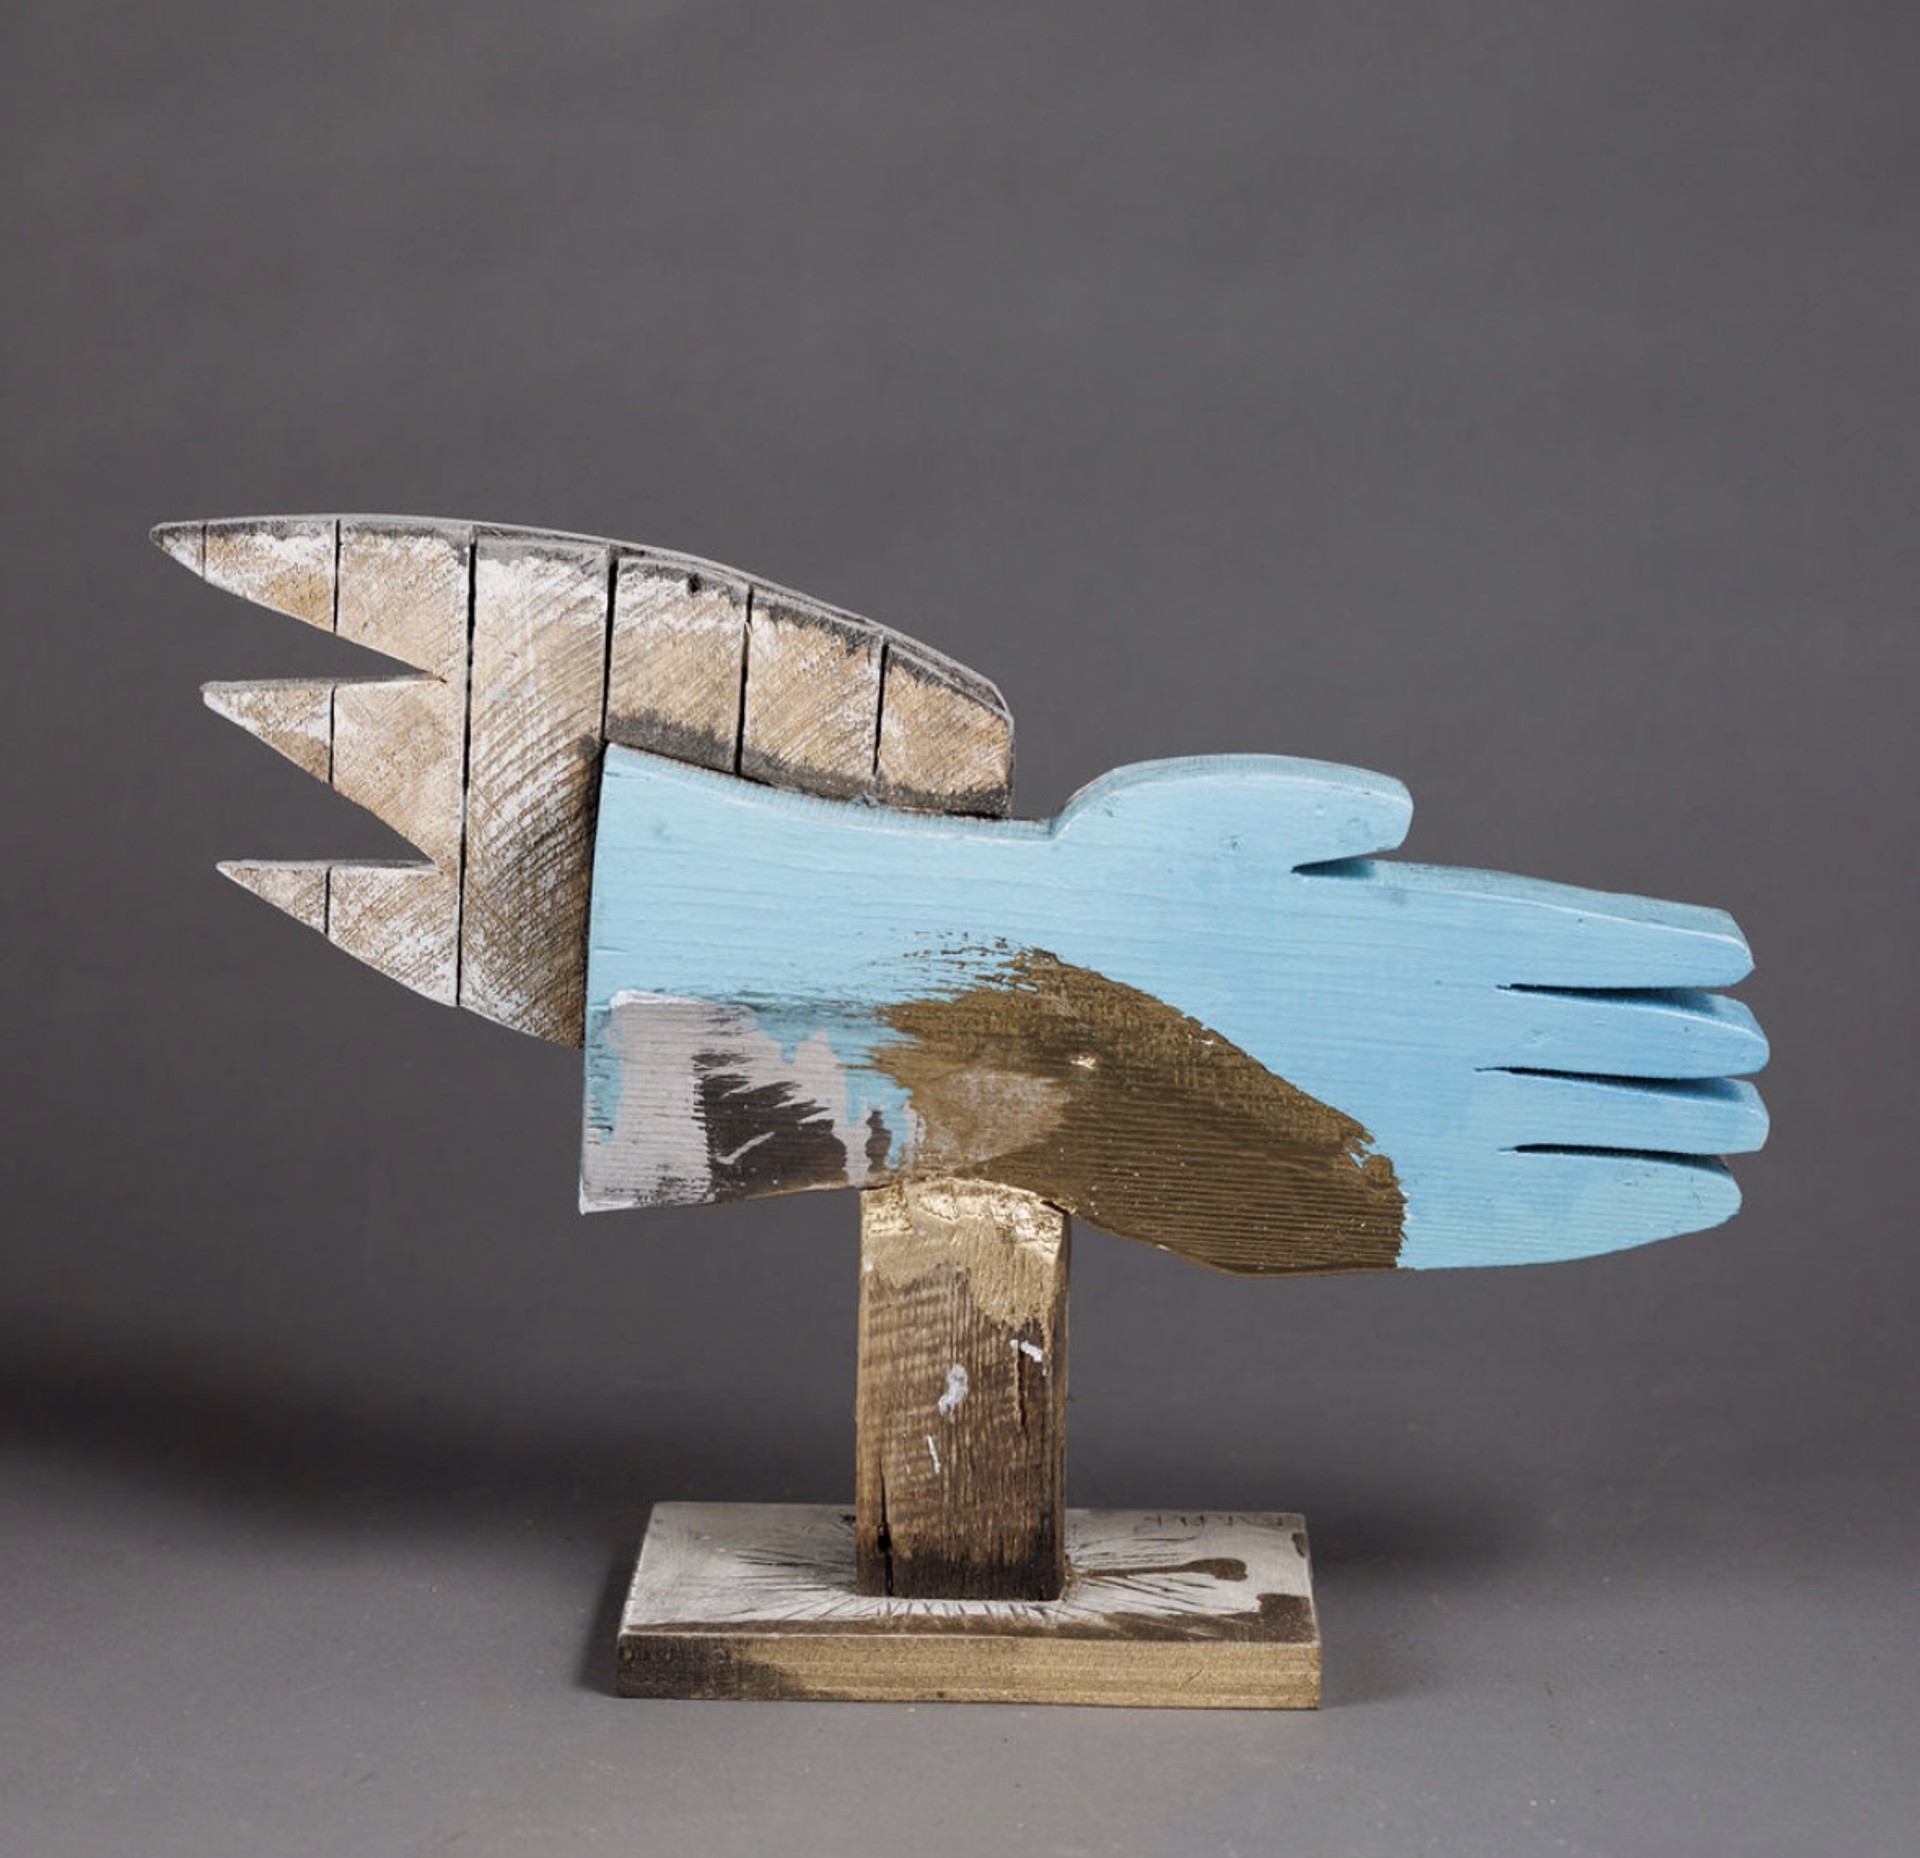 Winged Glove by Matthew Barter